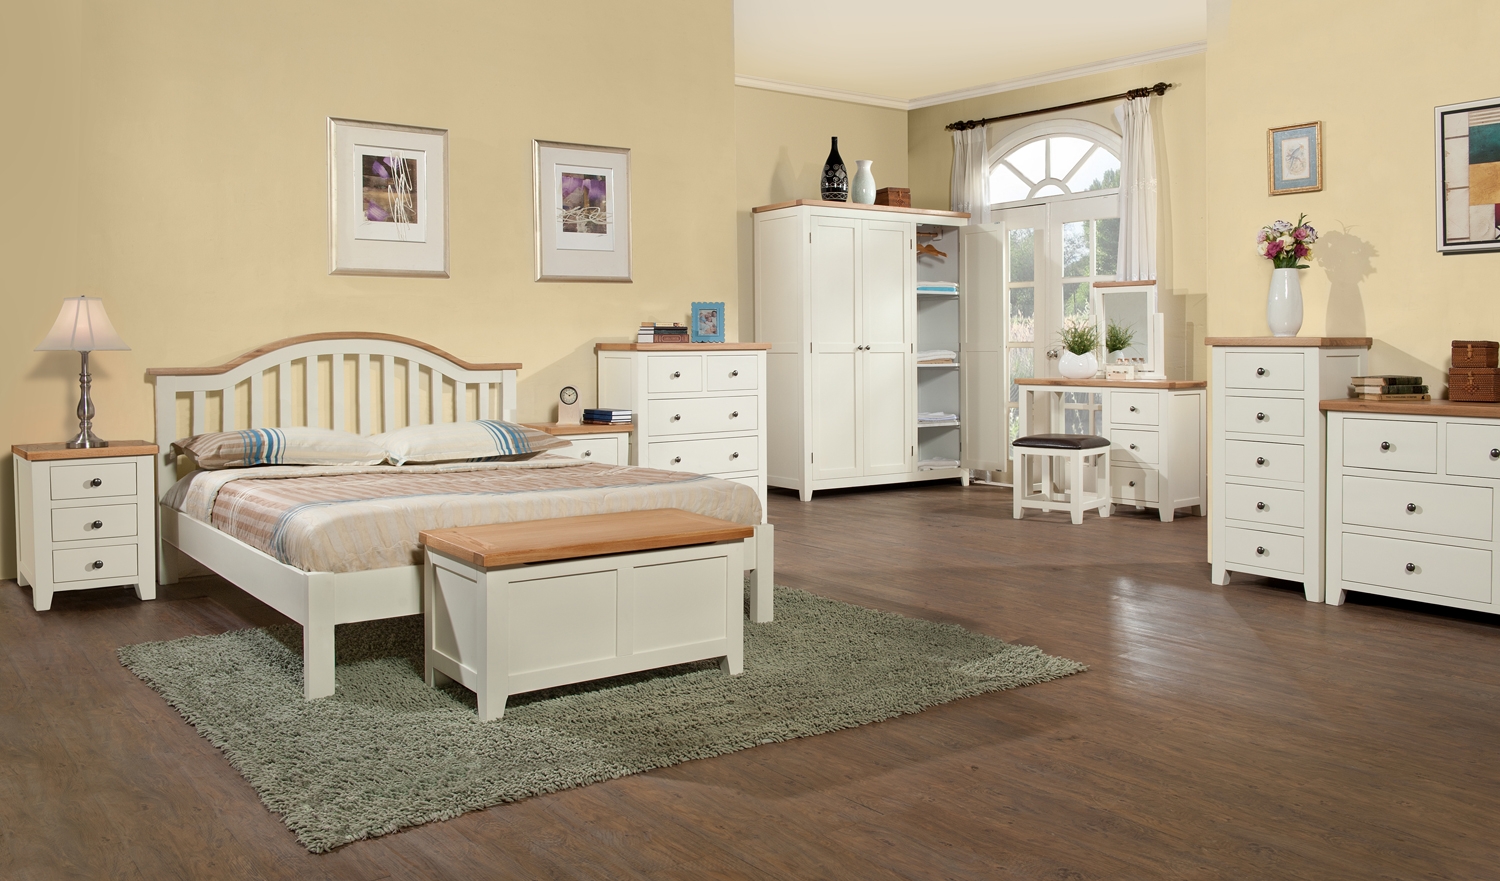 Luxury Off White Bedroom Furniture UkBest Bedroom Ideas 2017 painted oak bedroom furniture